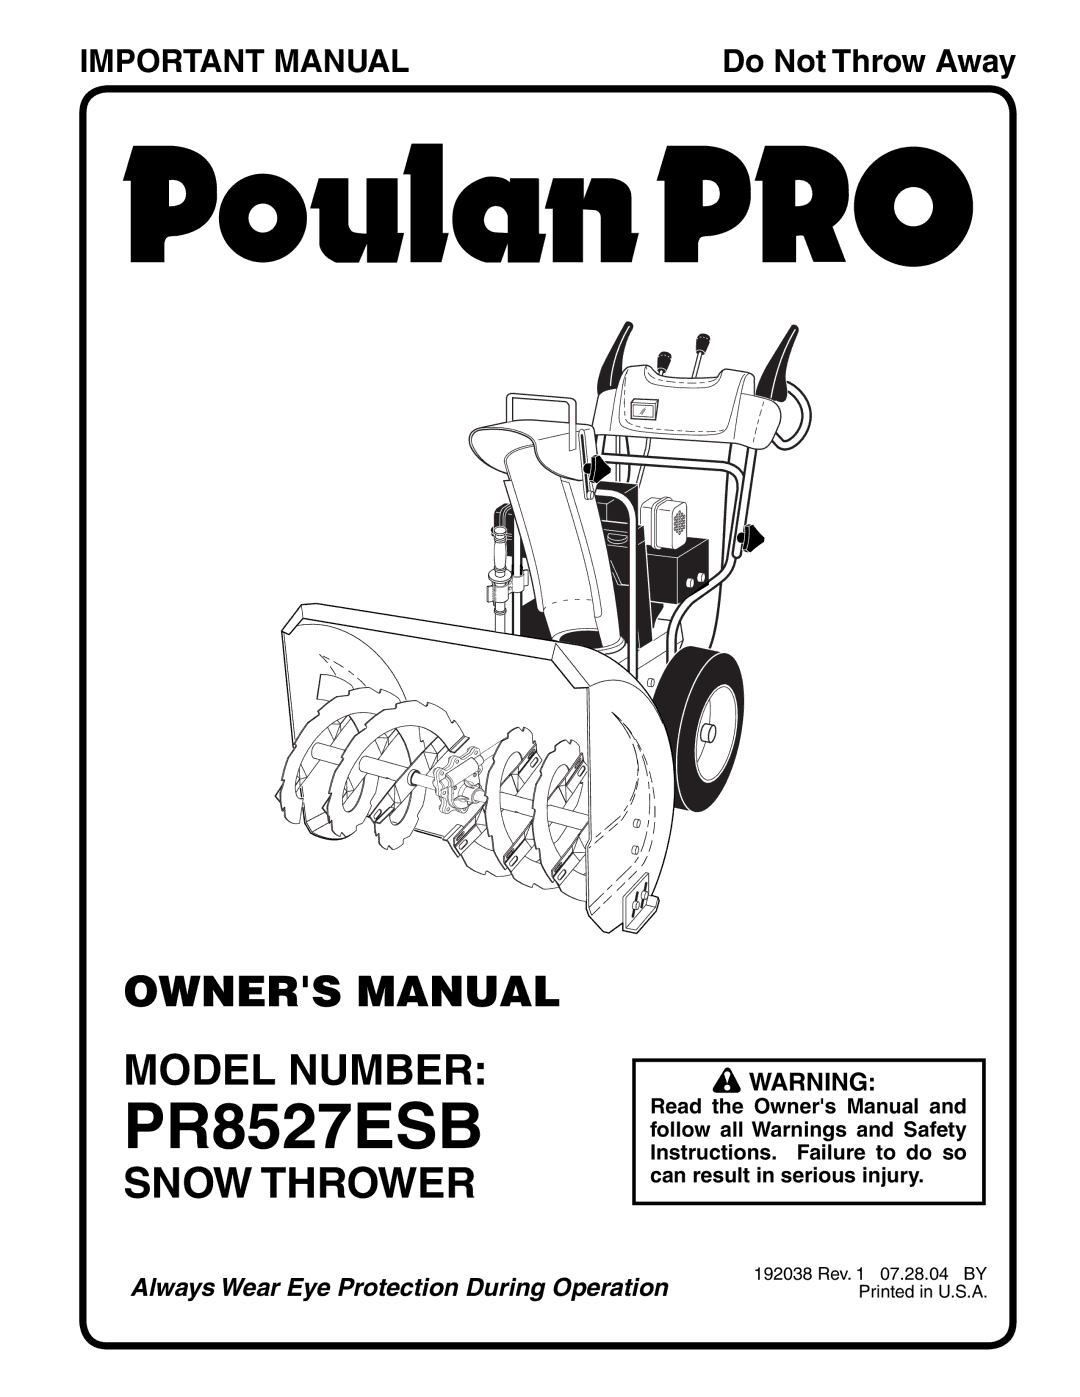 Poulan PR8527ESB owner manual Model Number, Snow Thrower 